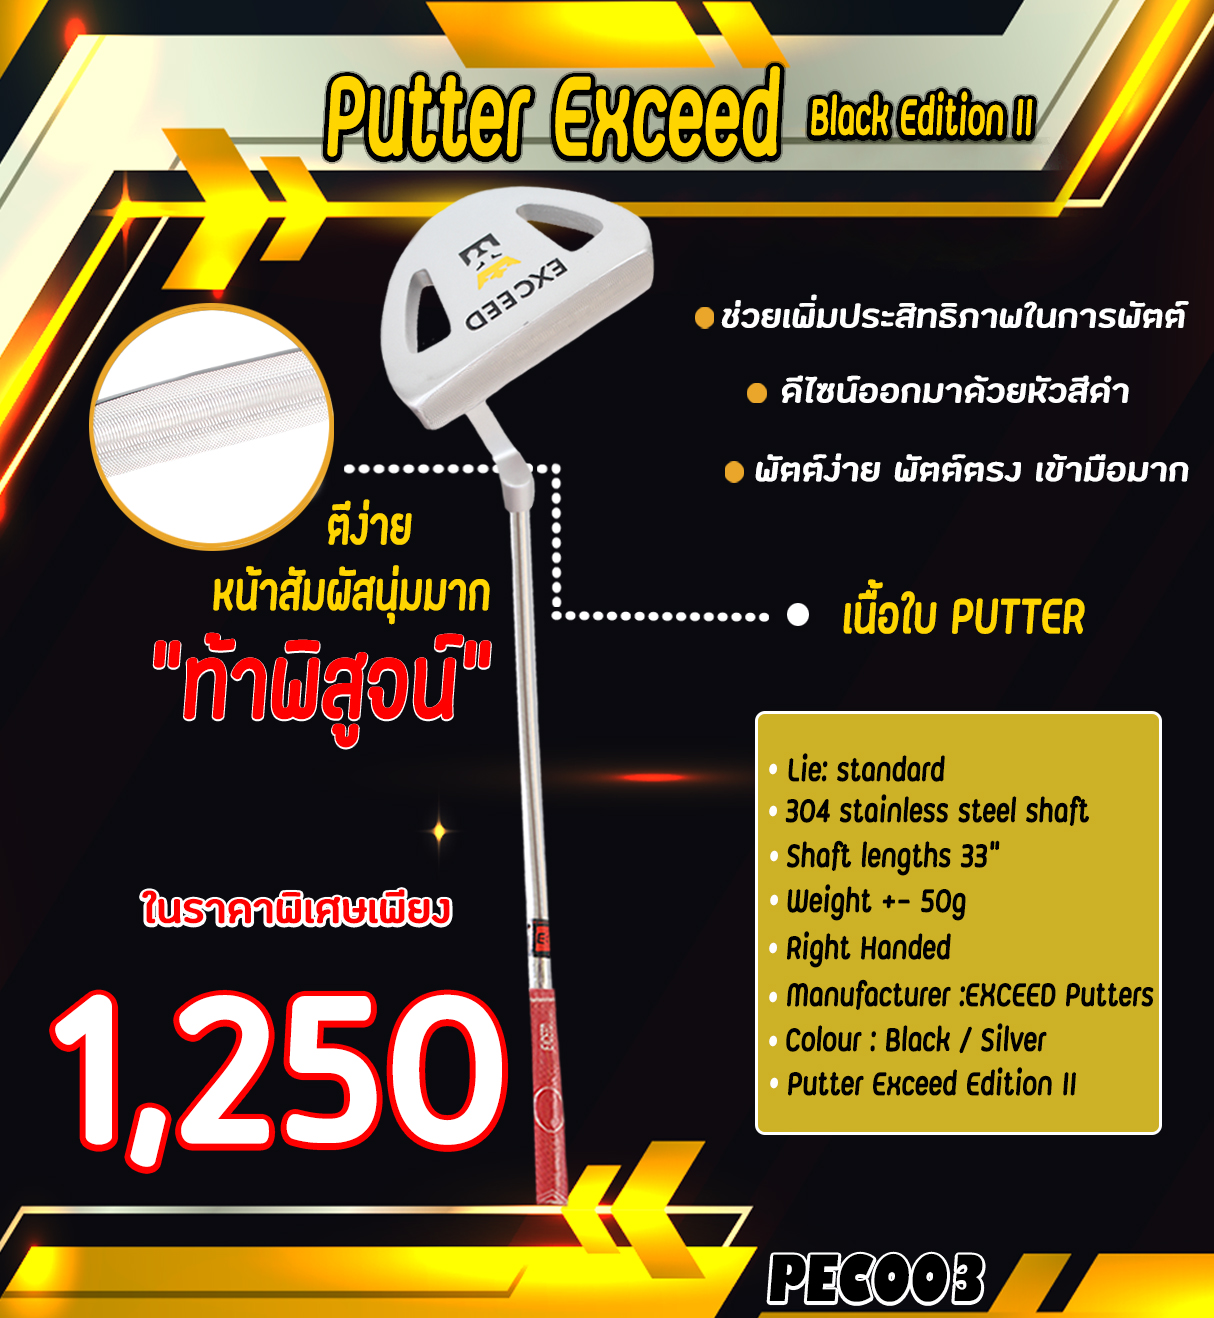 EXCEED New Version Putter Exceed Silver Edition II 2020 ไม้กอล์ฟ EXCEED ไม้พัตเตอร์ สำหรับกีฬากอล์ฟ PEC003